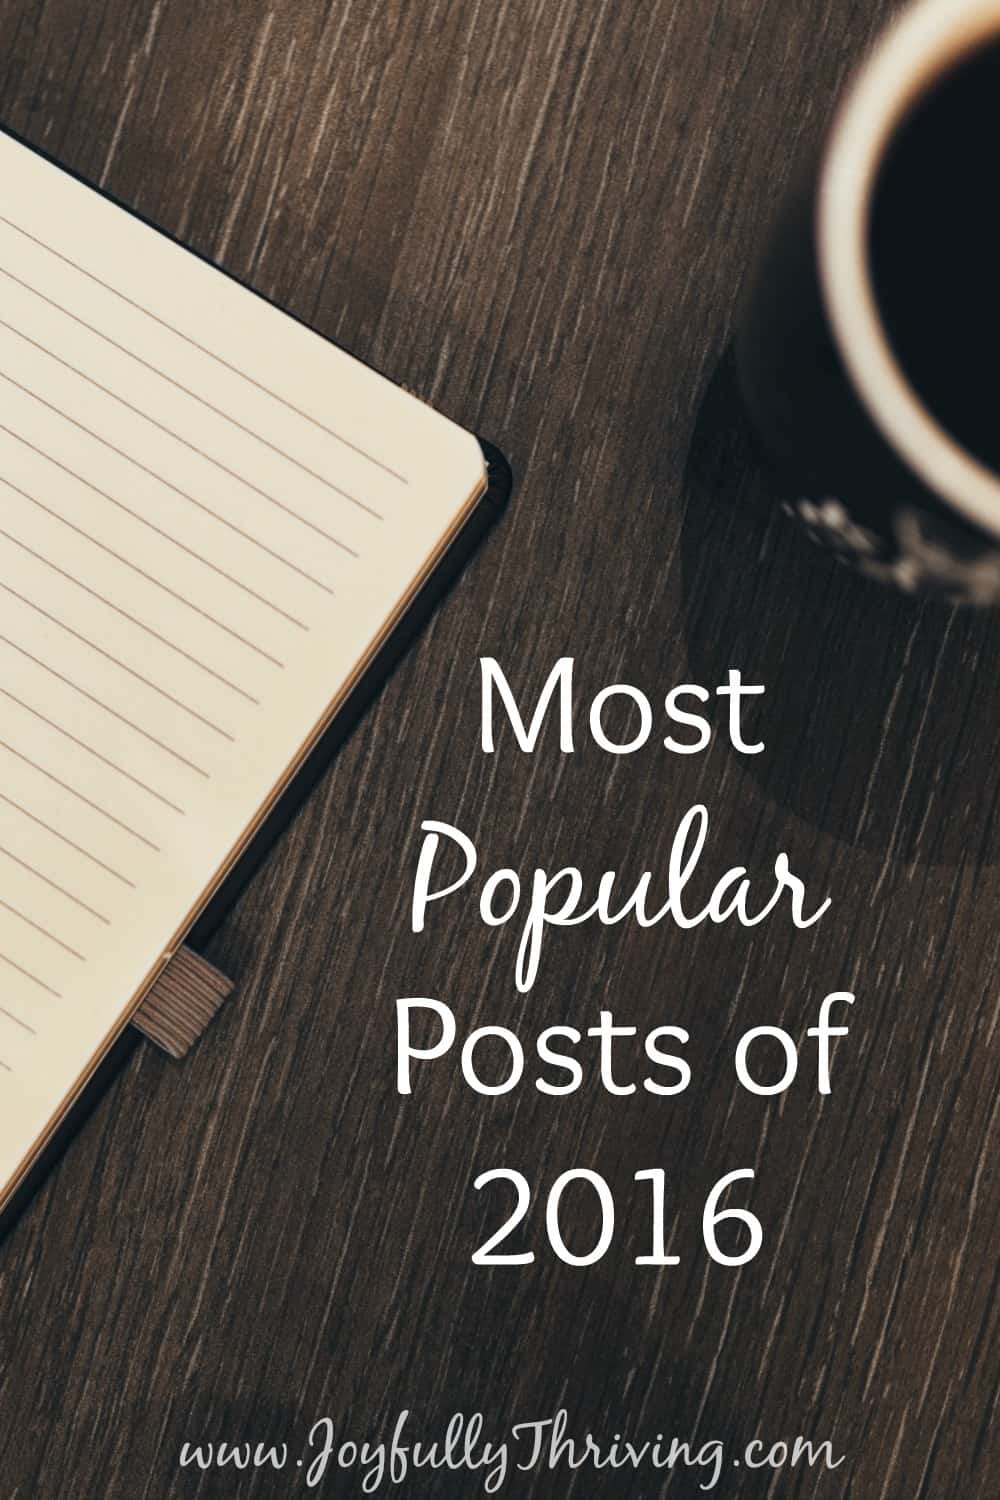 Most Popular Posts of 2016